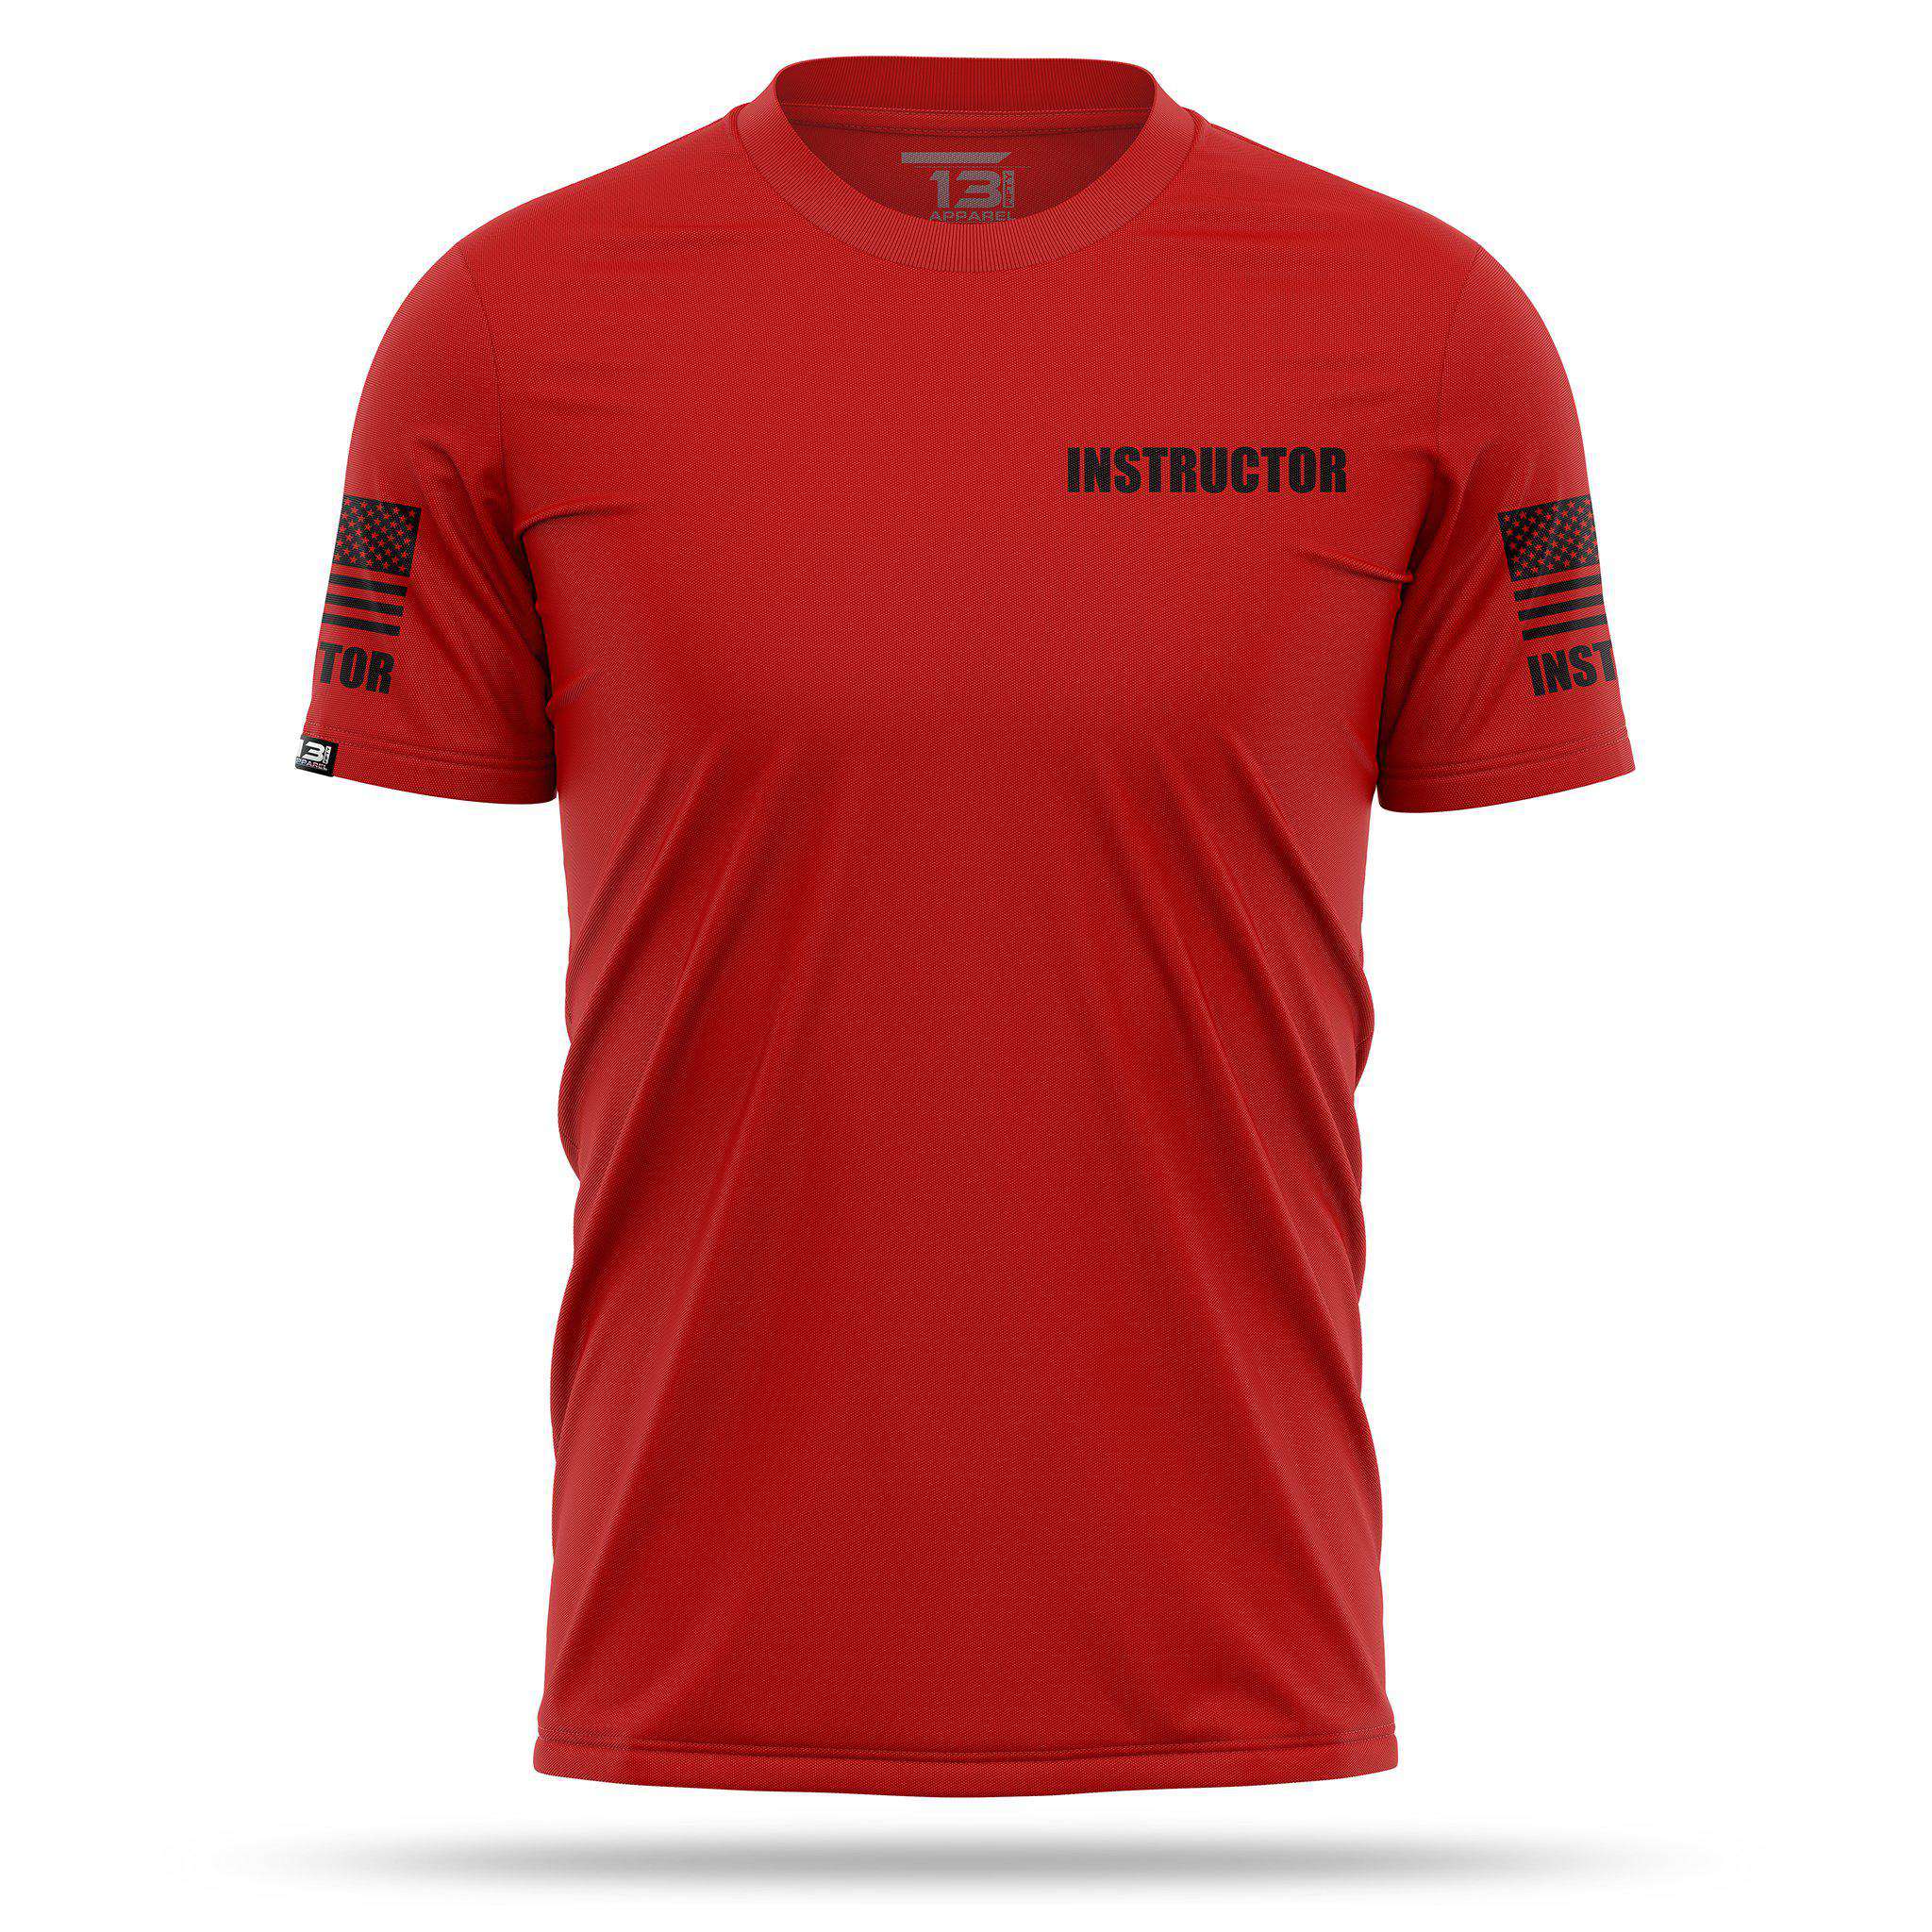 [RED RANGER] Men's Instructor Shirt [RED/BLK] | 13 Fifty Apparel